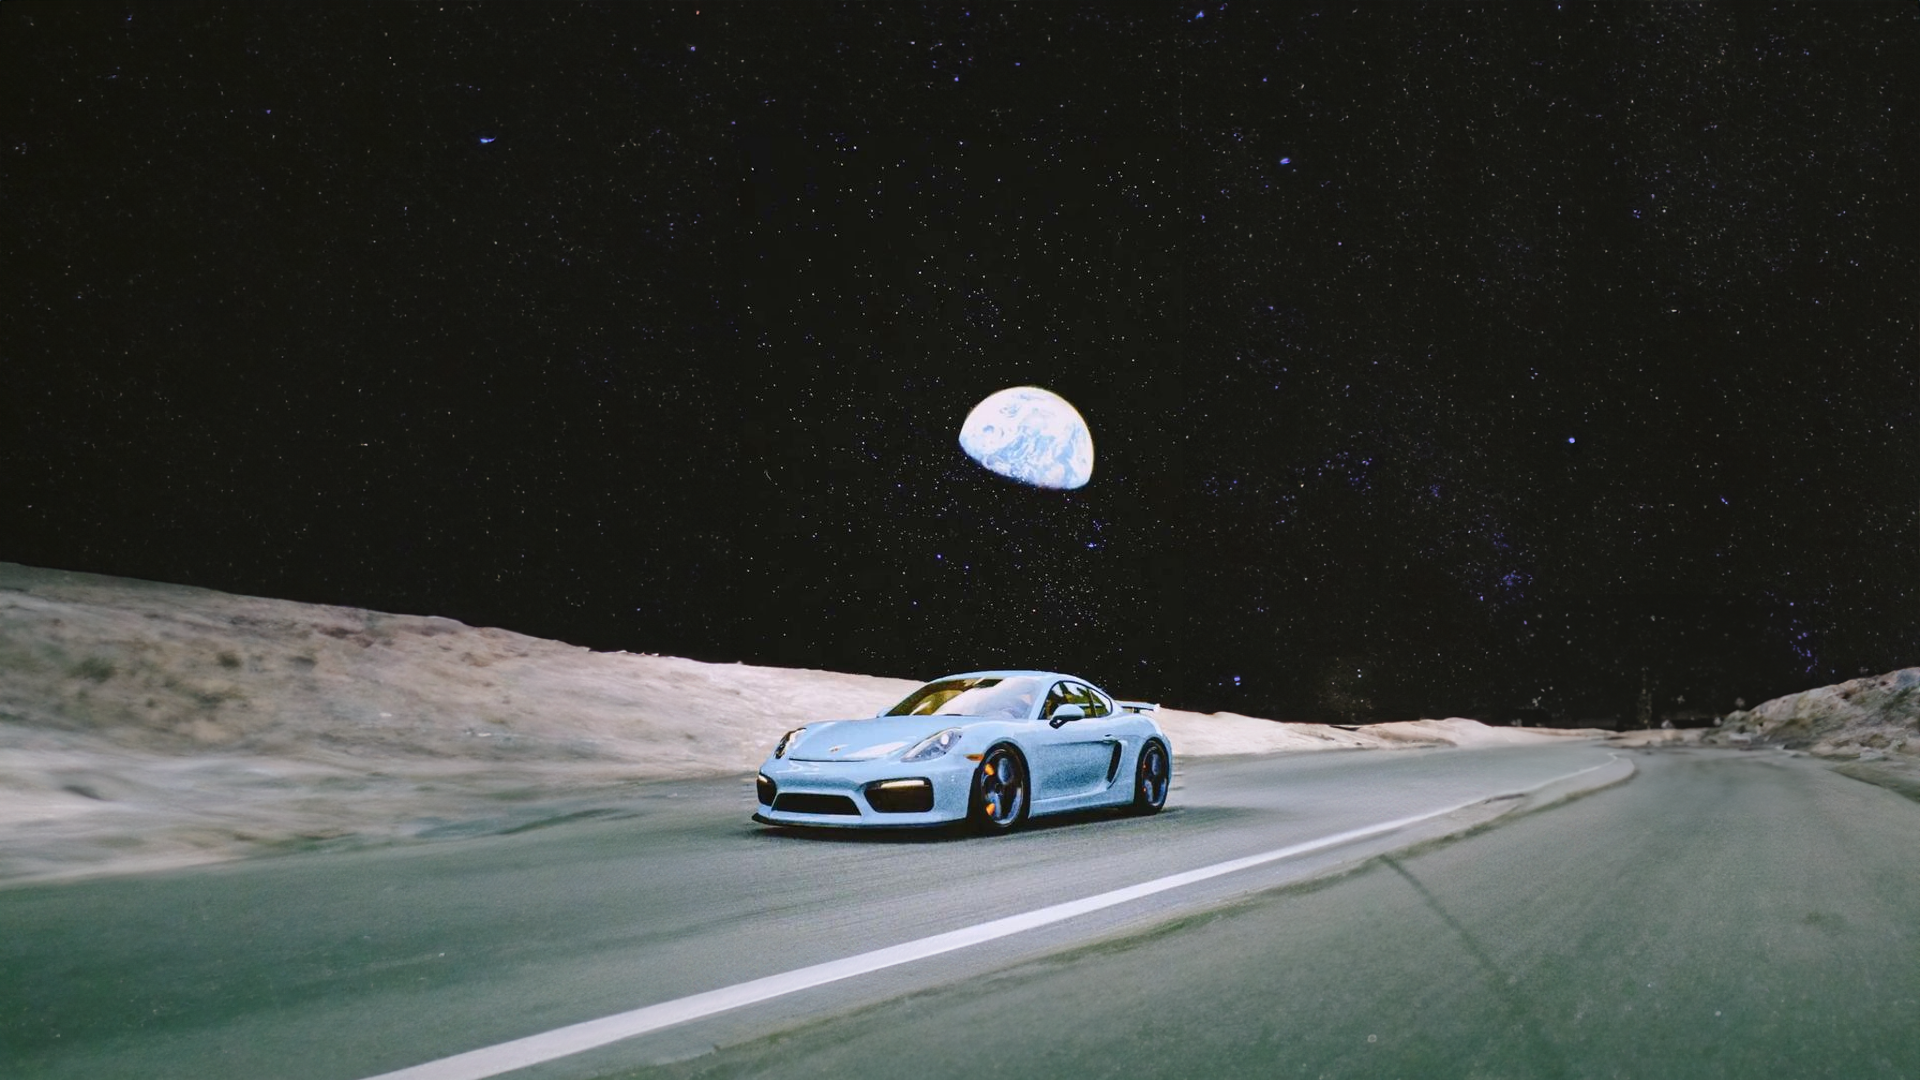 General 1920x1080 car space Moon sky stars road frontal view Porsche Porsche 718 German cars Volkswagen Group